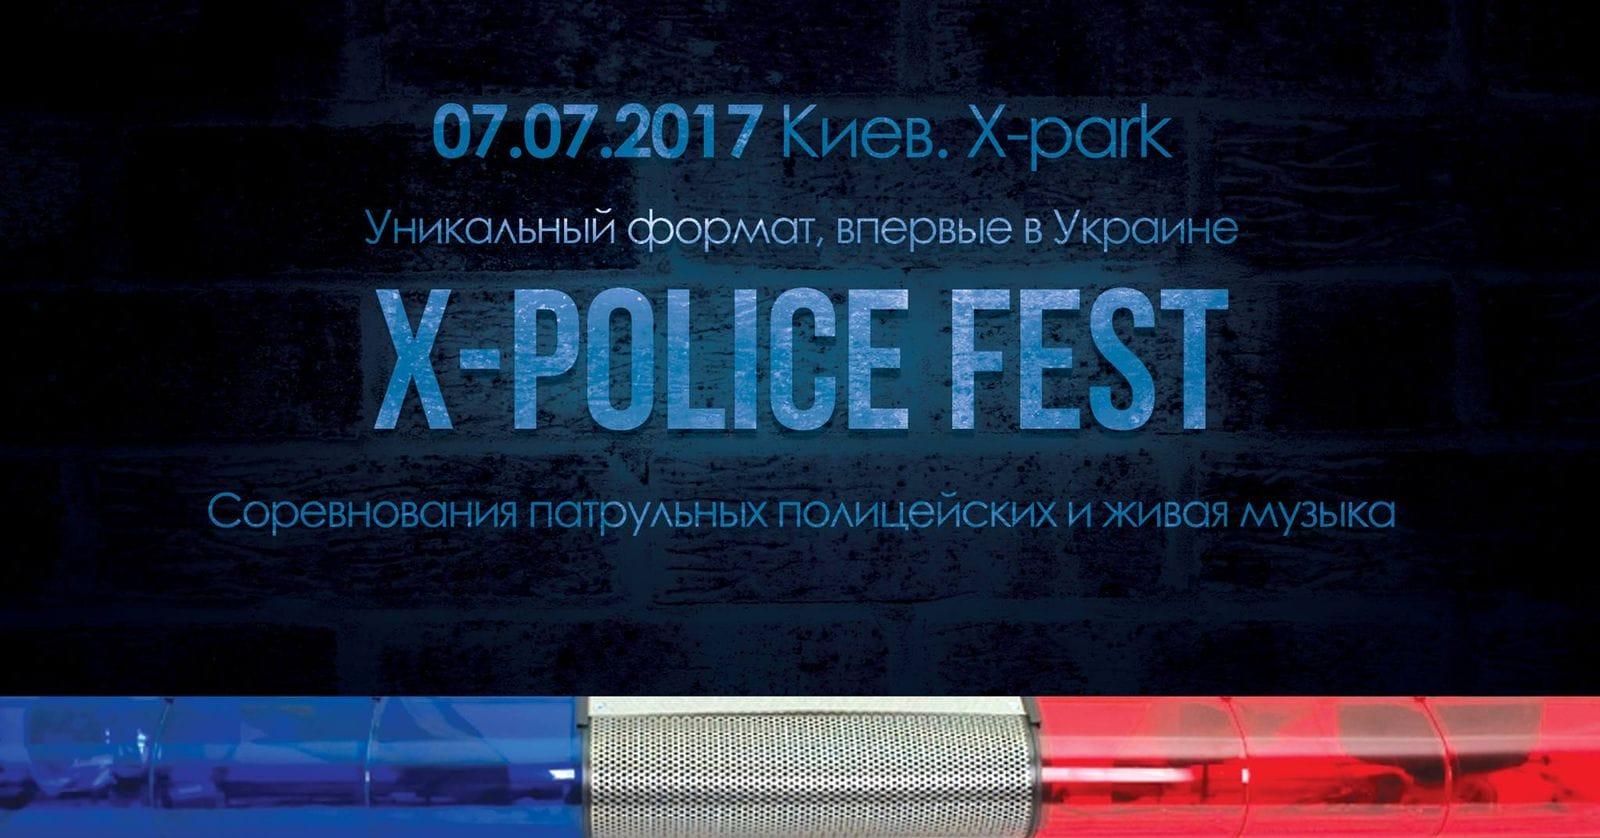 X-Police Fest 7.07.2017